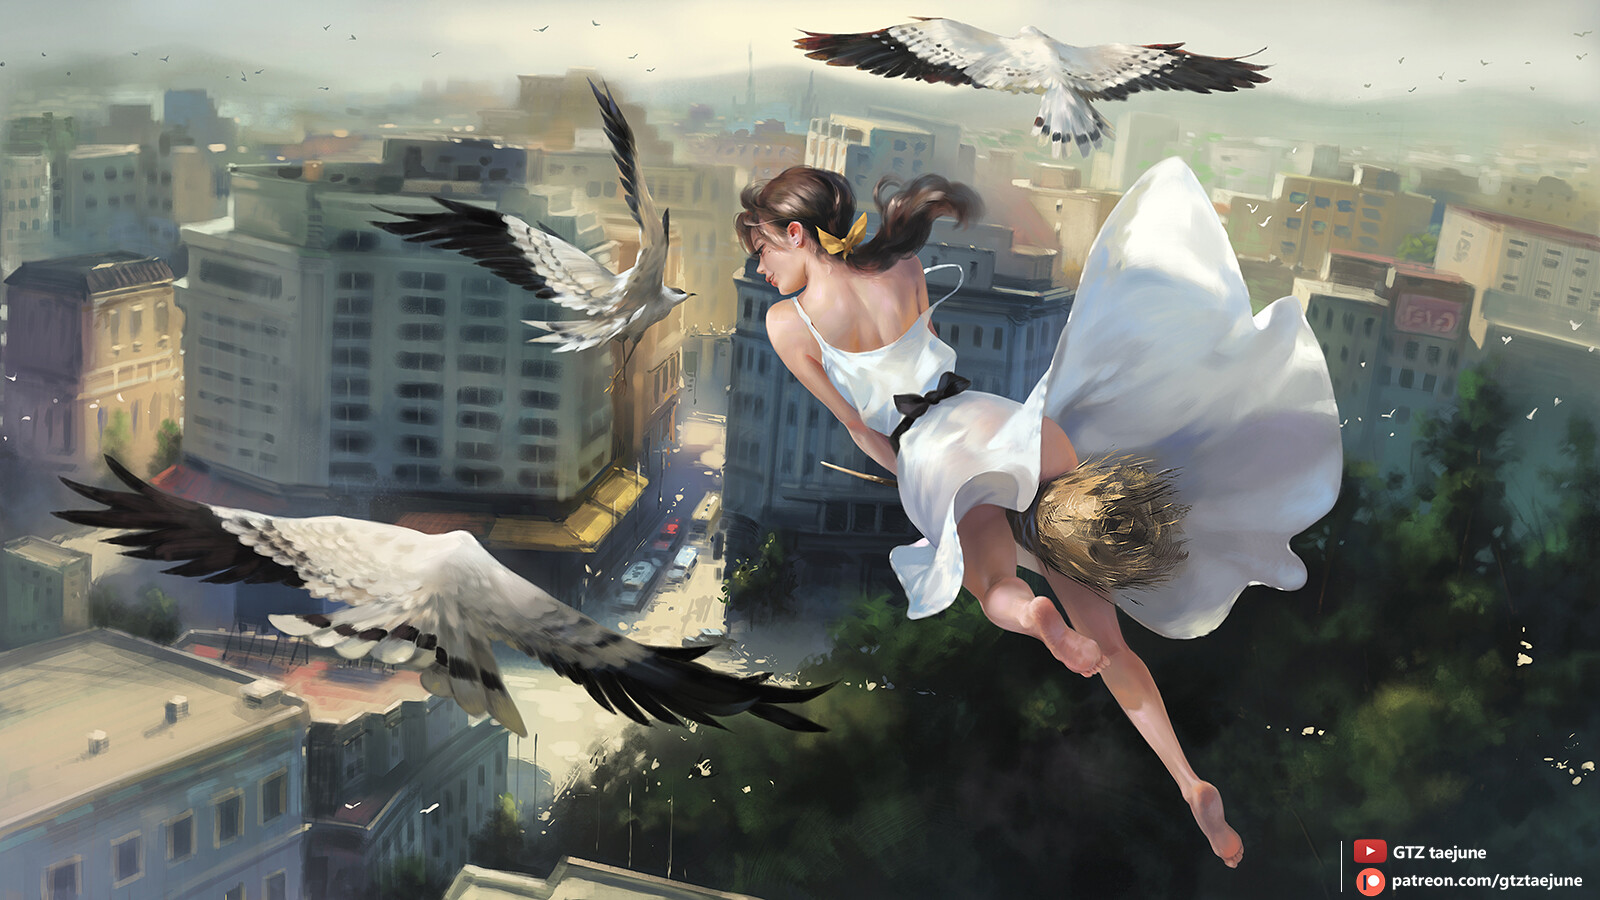 Ponytail Fantasy Girl Dress White Dress Witch Broom Witches Broom Barefoot City Birds Fantasy Art Ar 1600x900